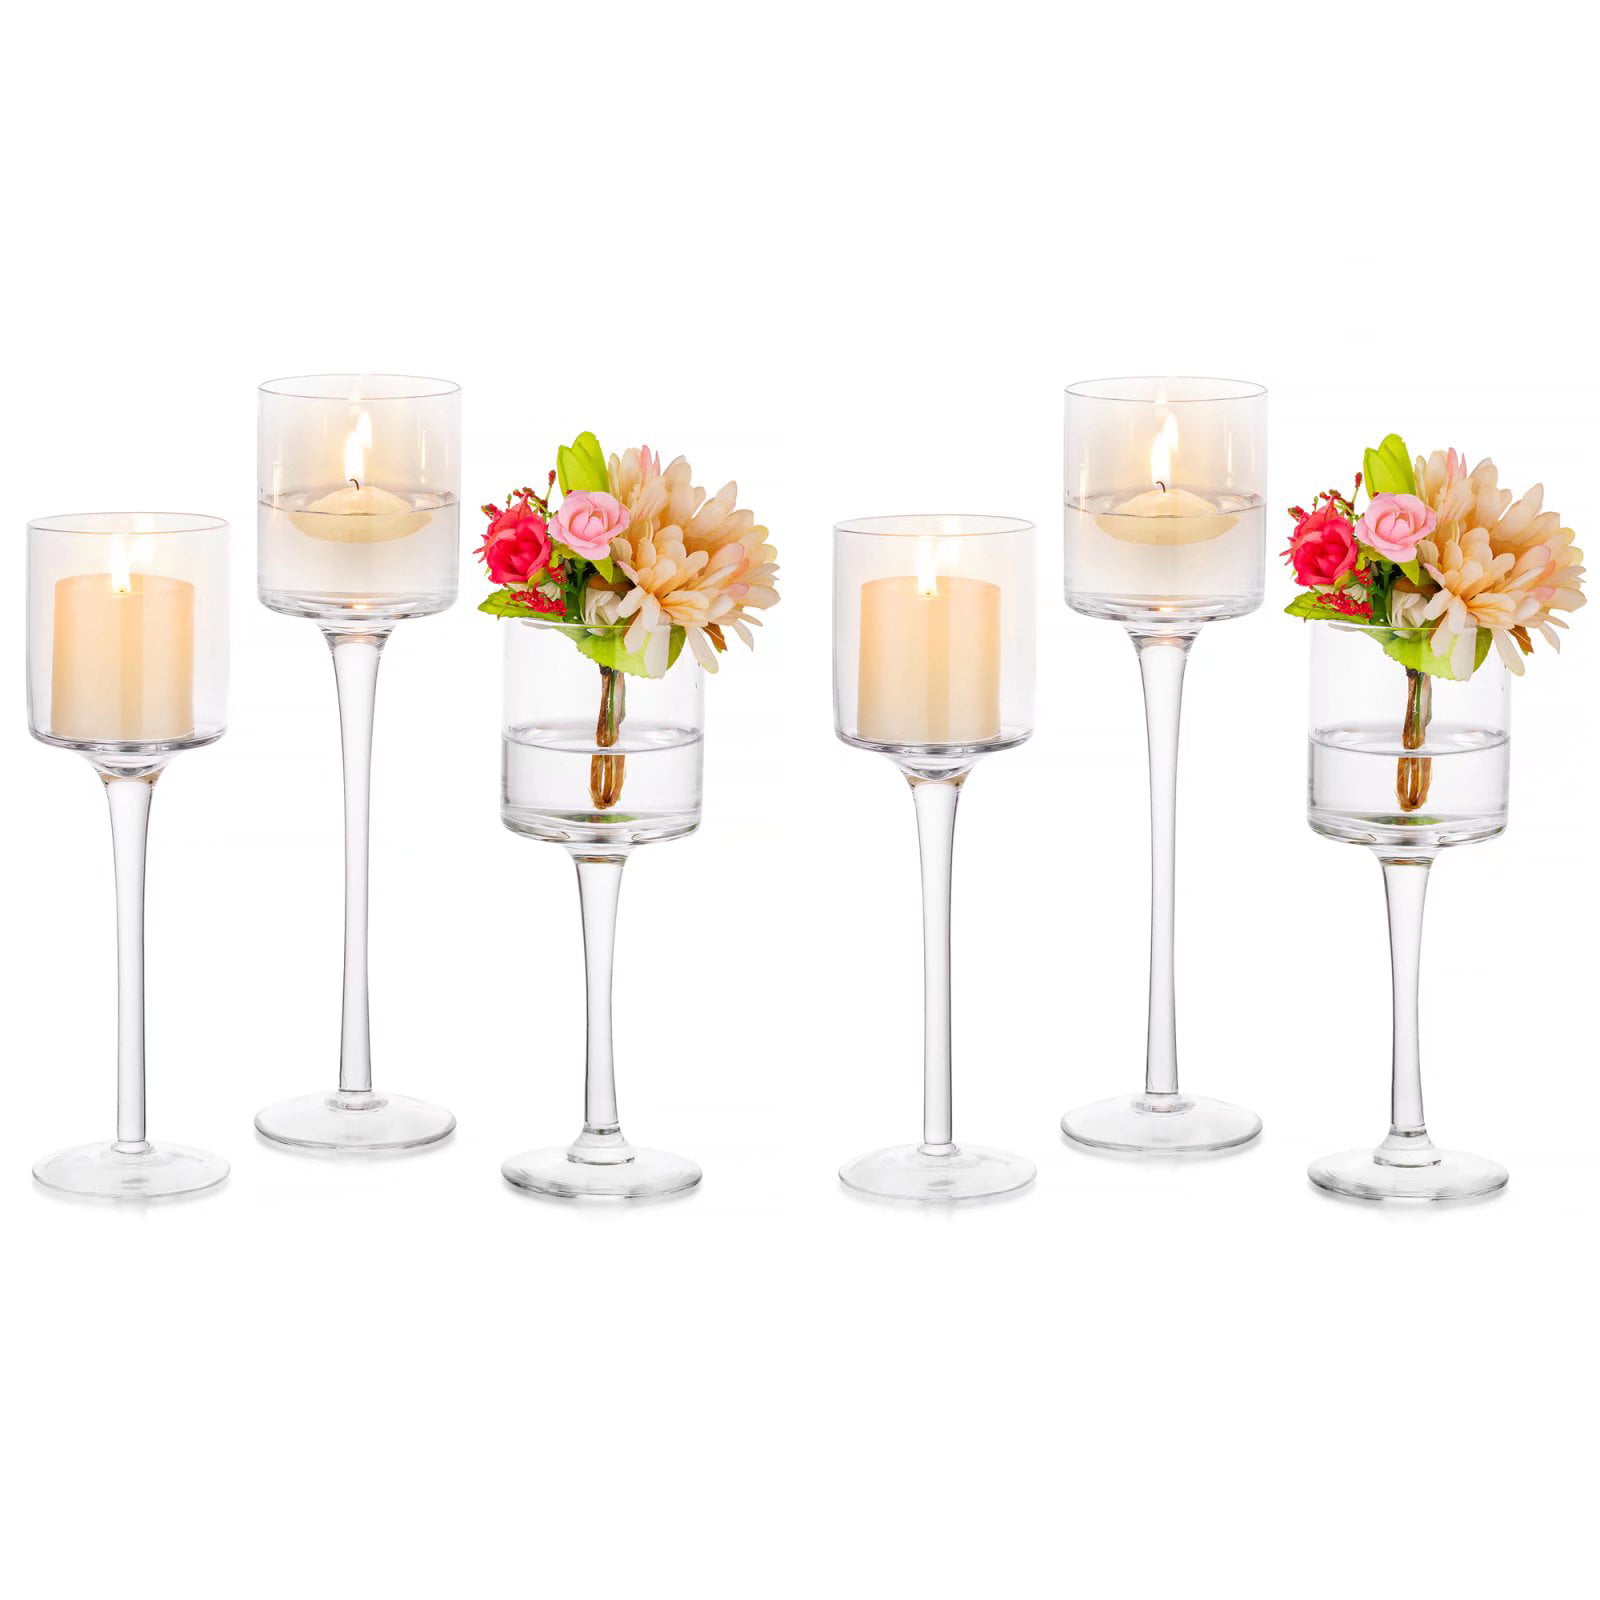 Crystal Candlestick Tea Light Holder Candle Stand Centerpieces Wedding Decor UK 